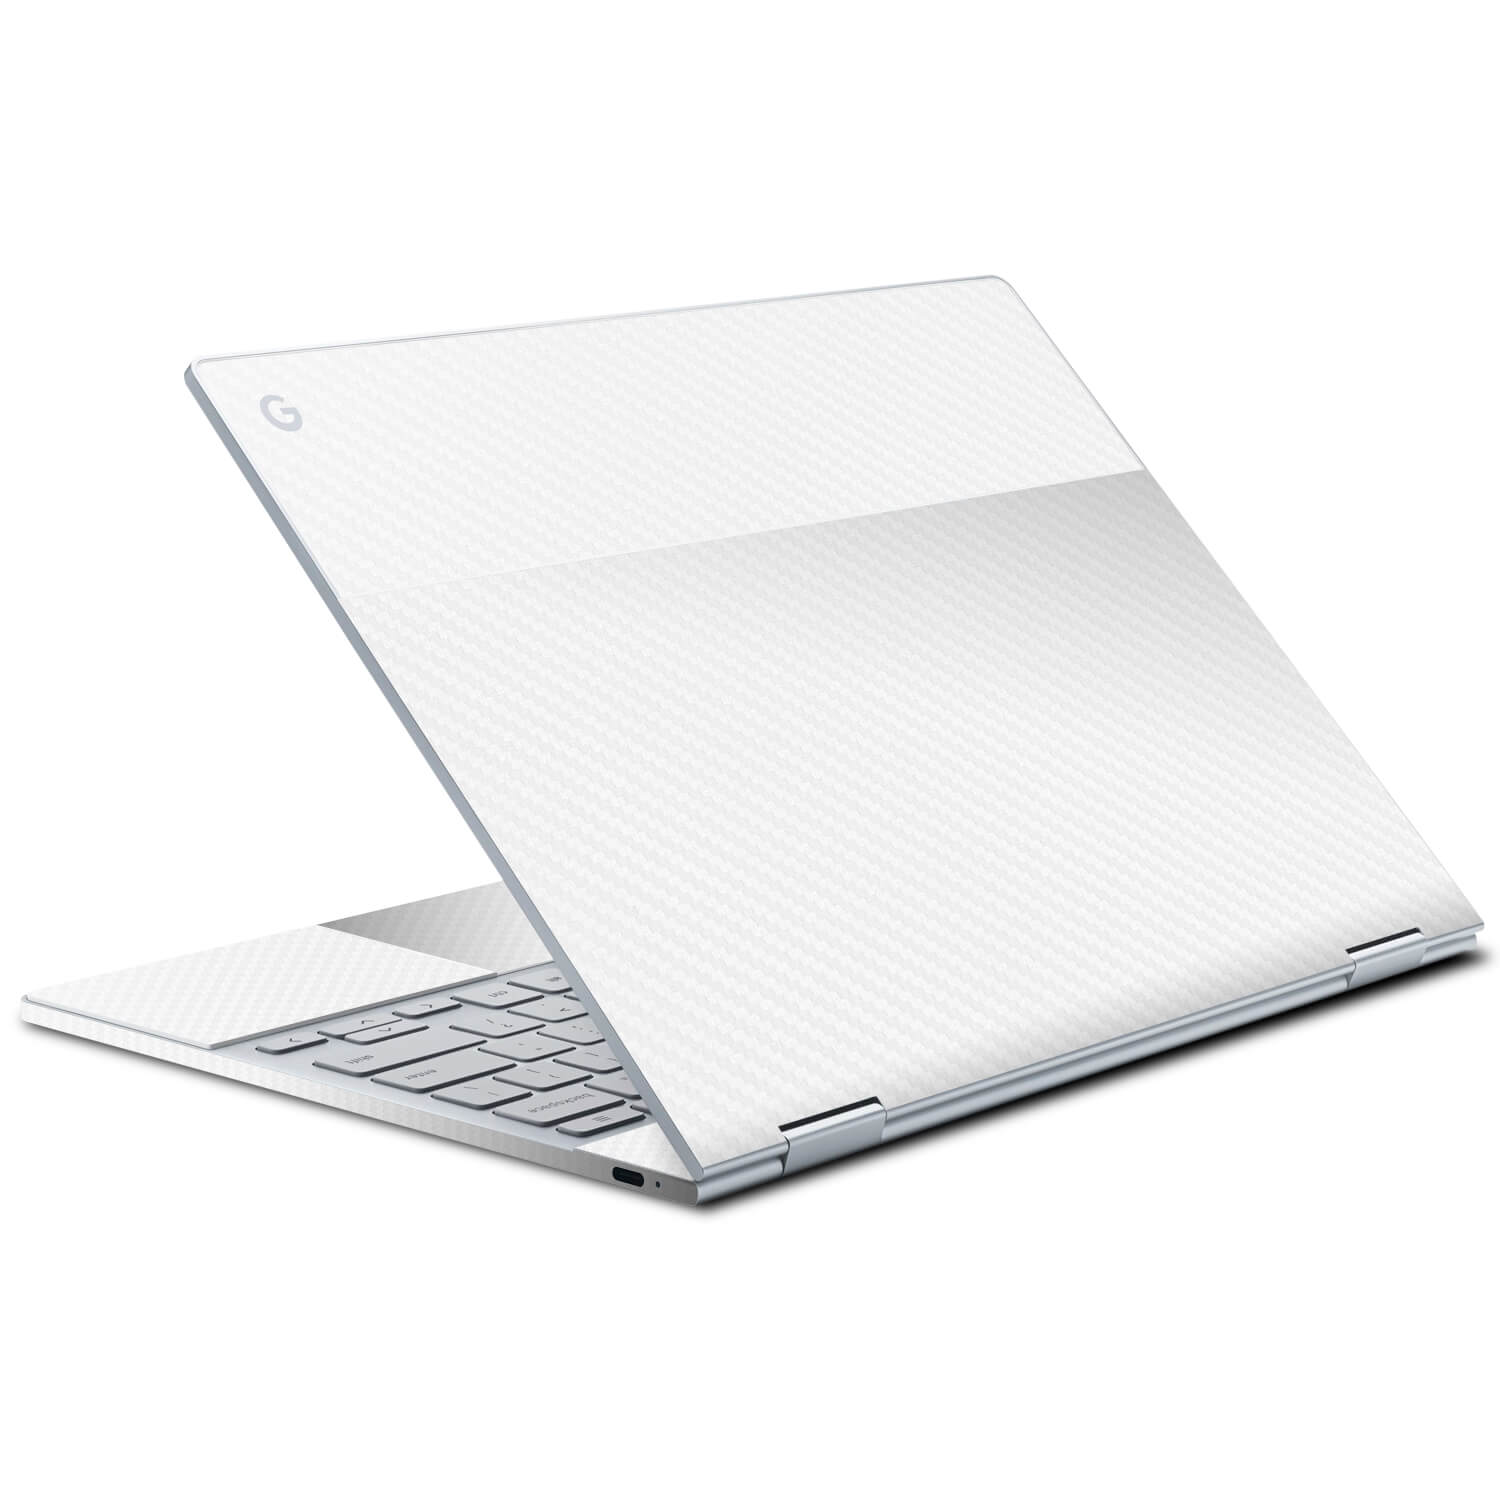 Chromebook Vs Laptop